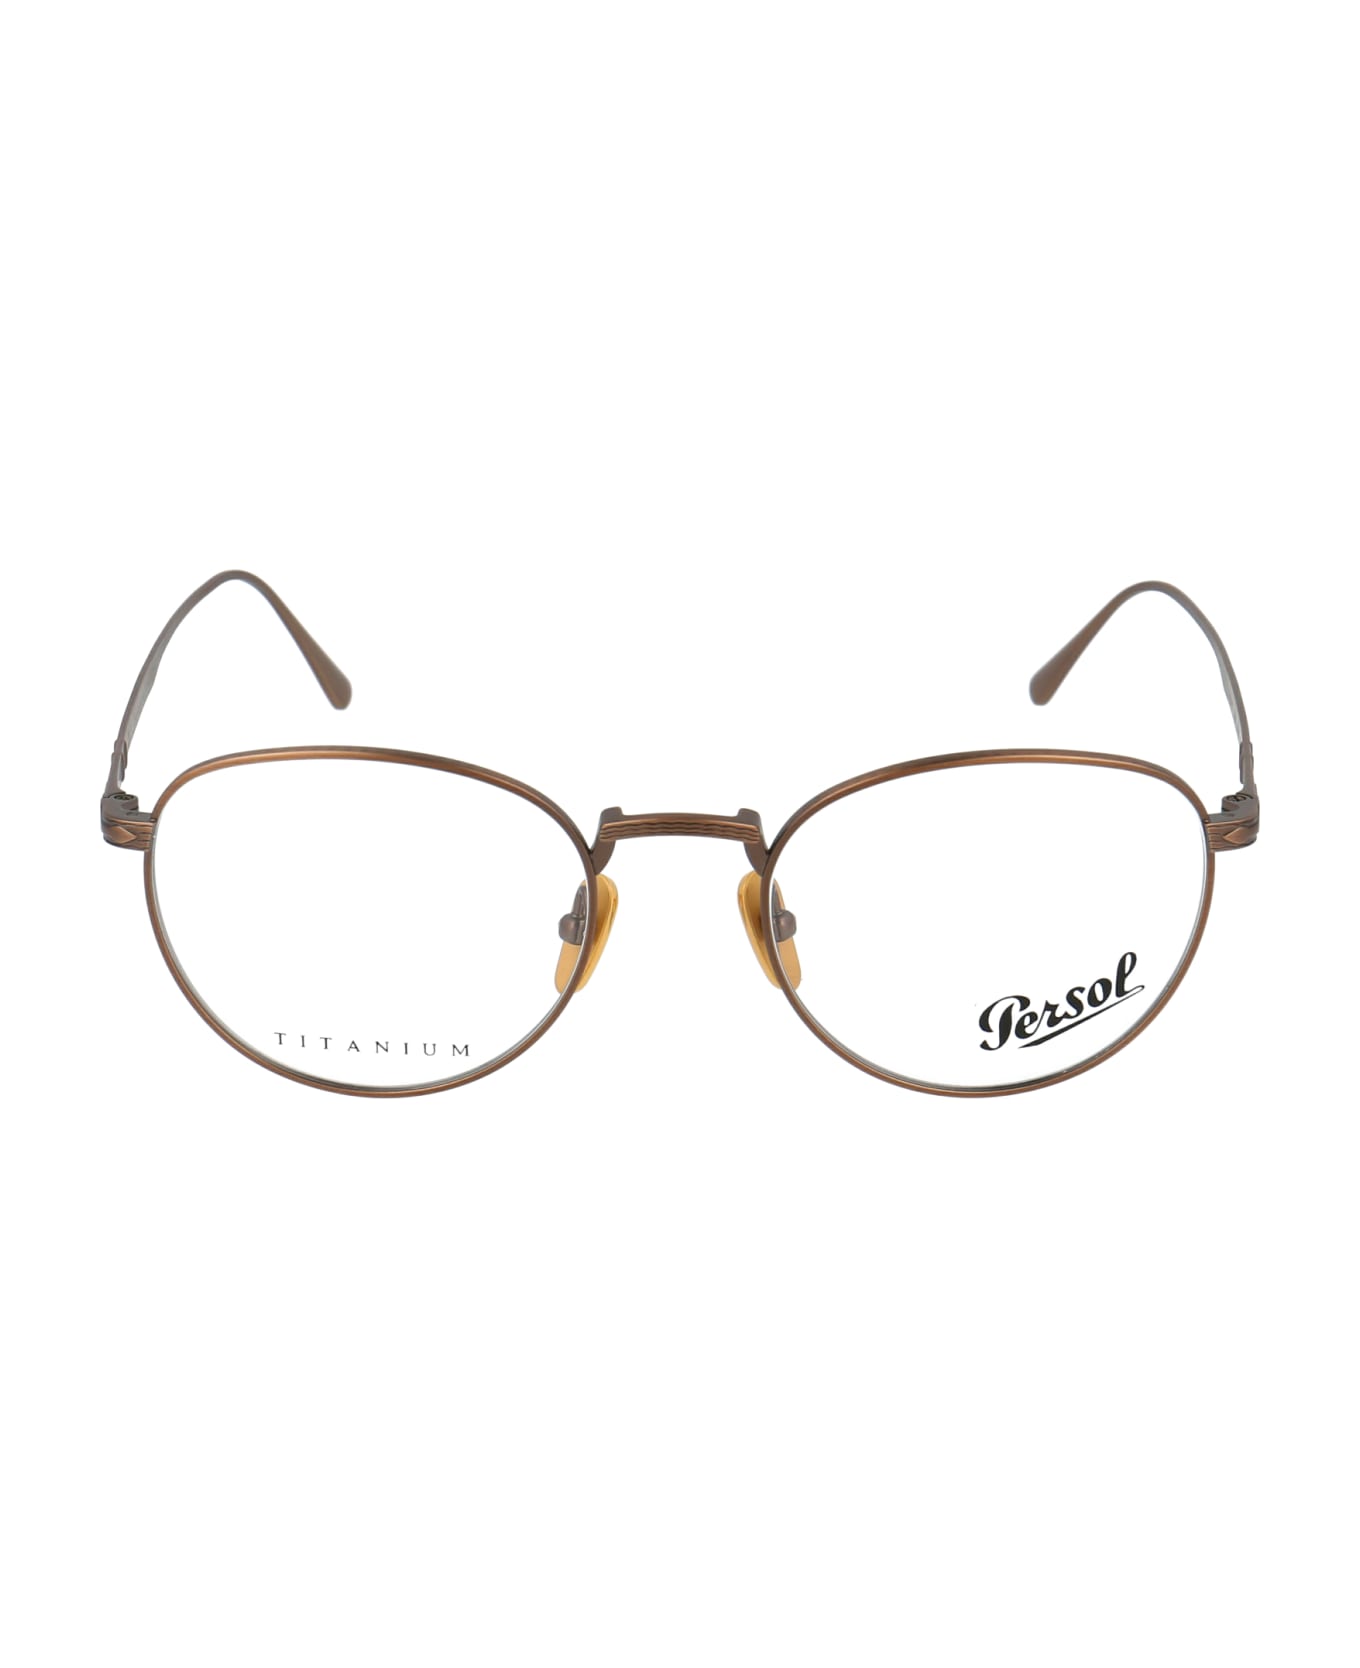 Persol 0po5002vt Glasses - 8003 BRONZE